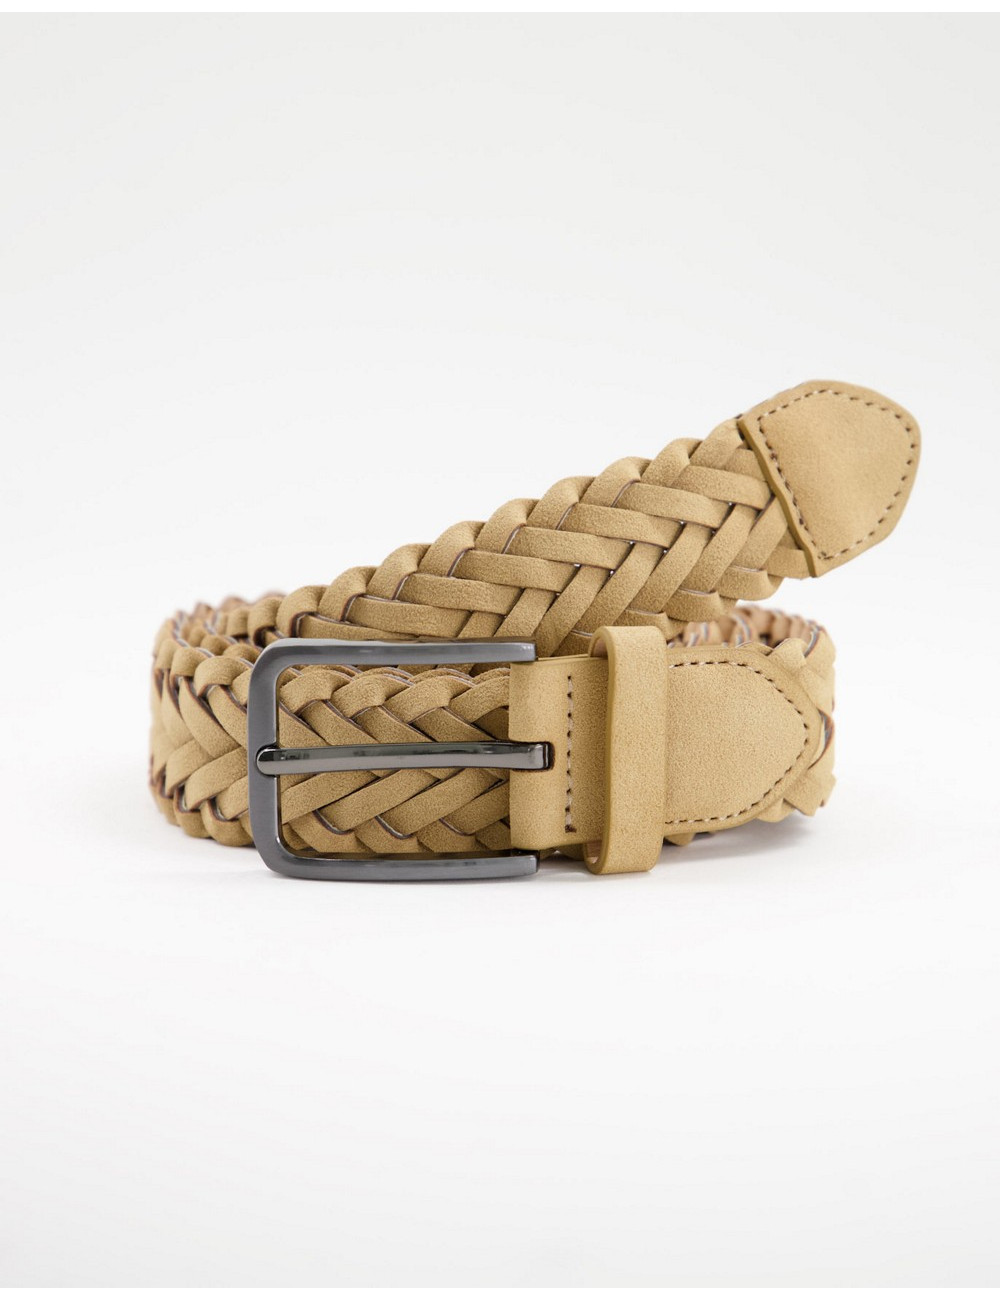 New Look braided weave belt...